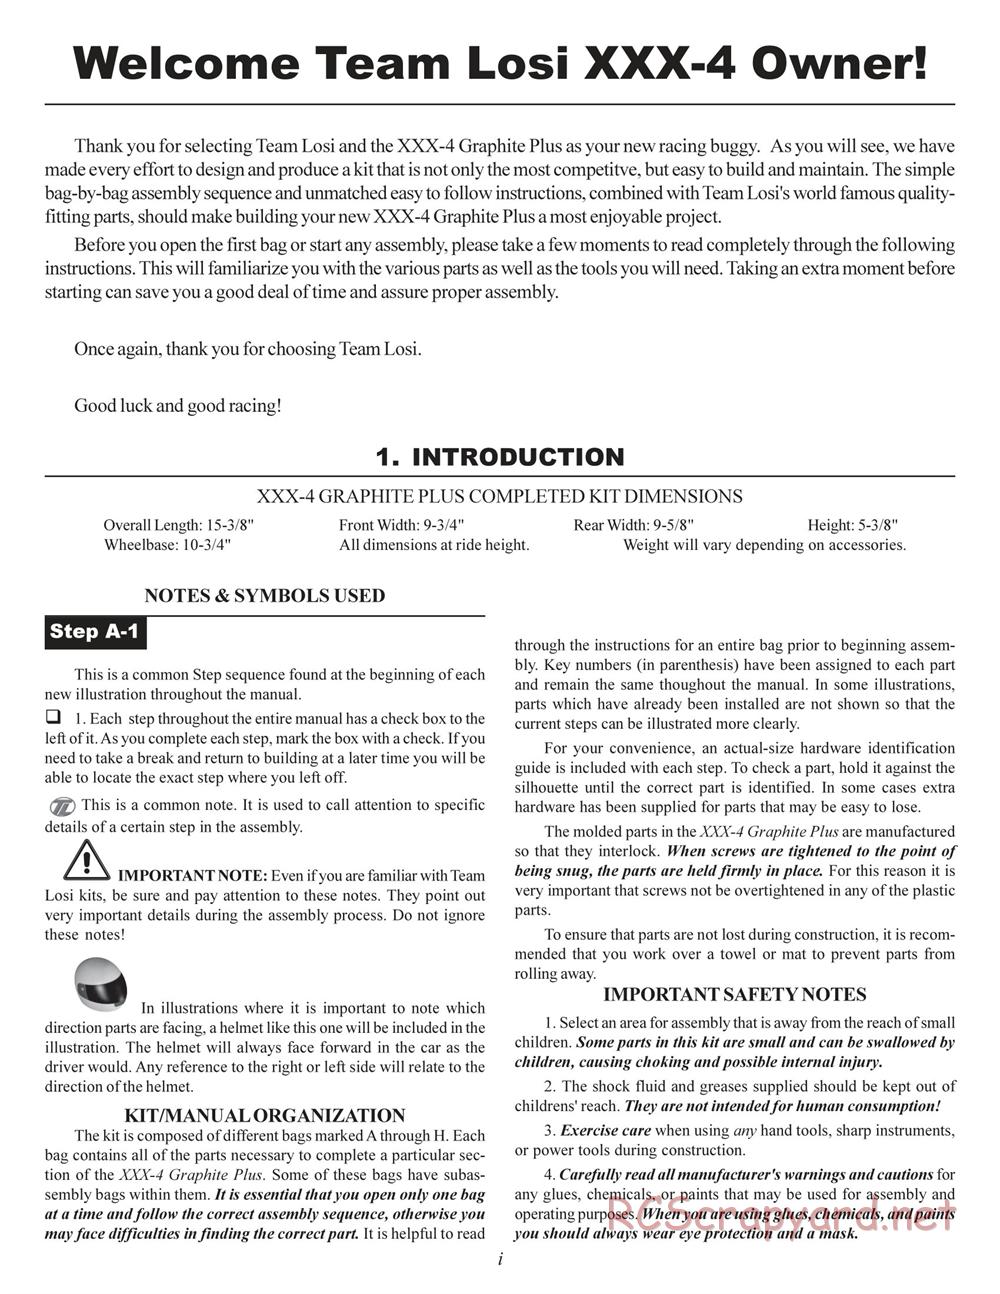 Team Losi - XXX4 G+ (Graphite Plus) - Manual - Page 2